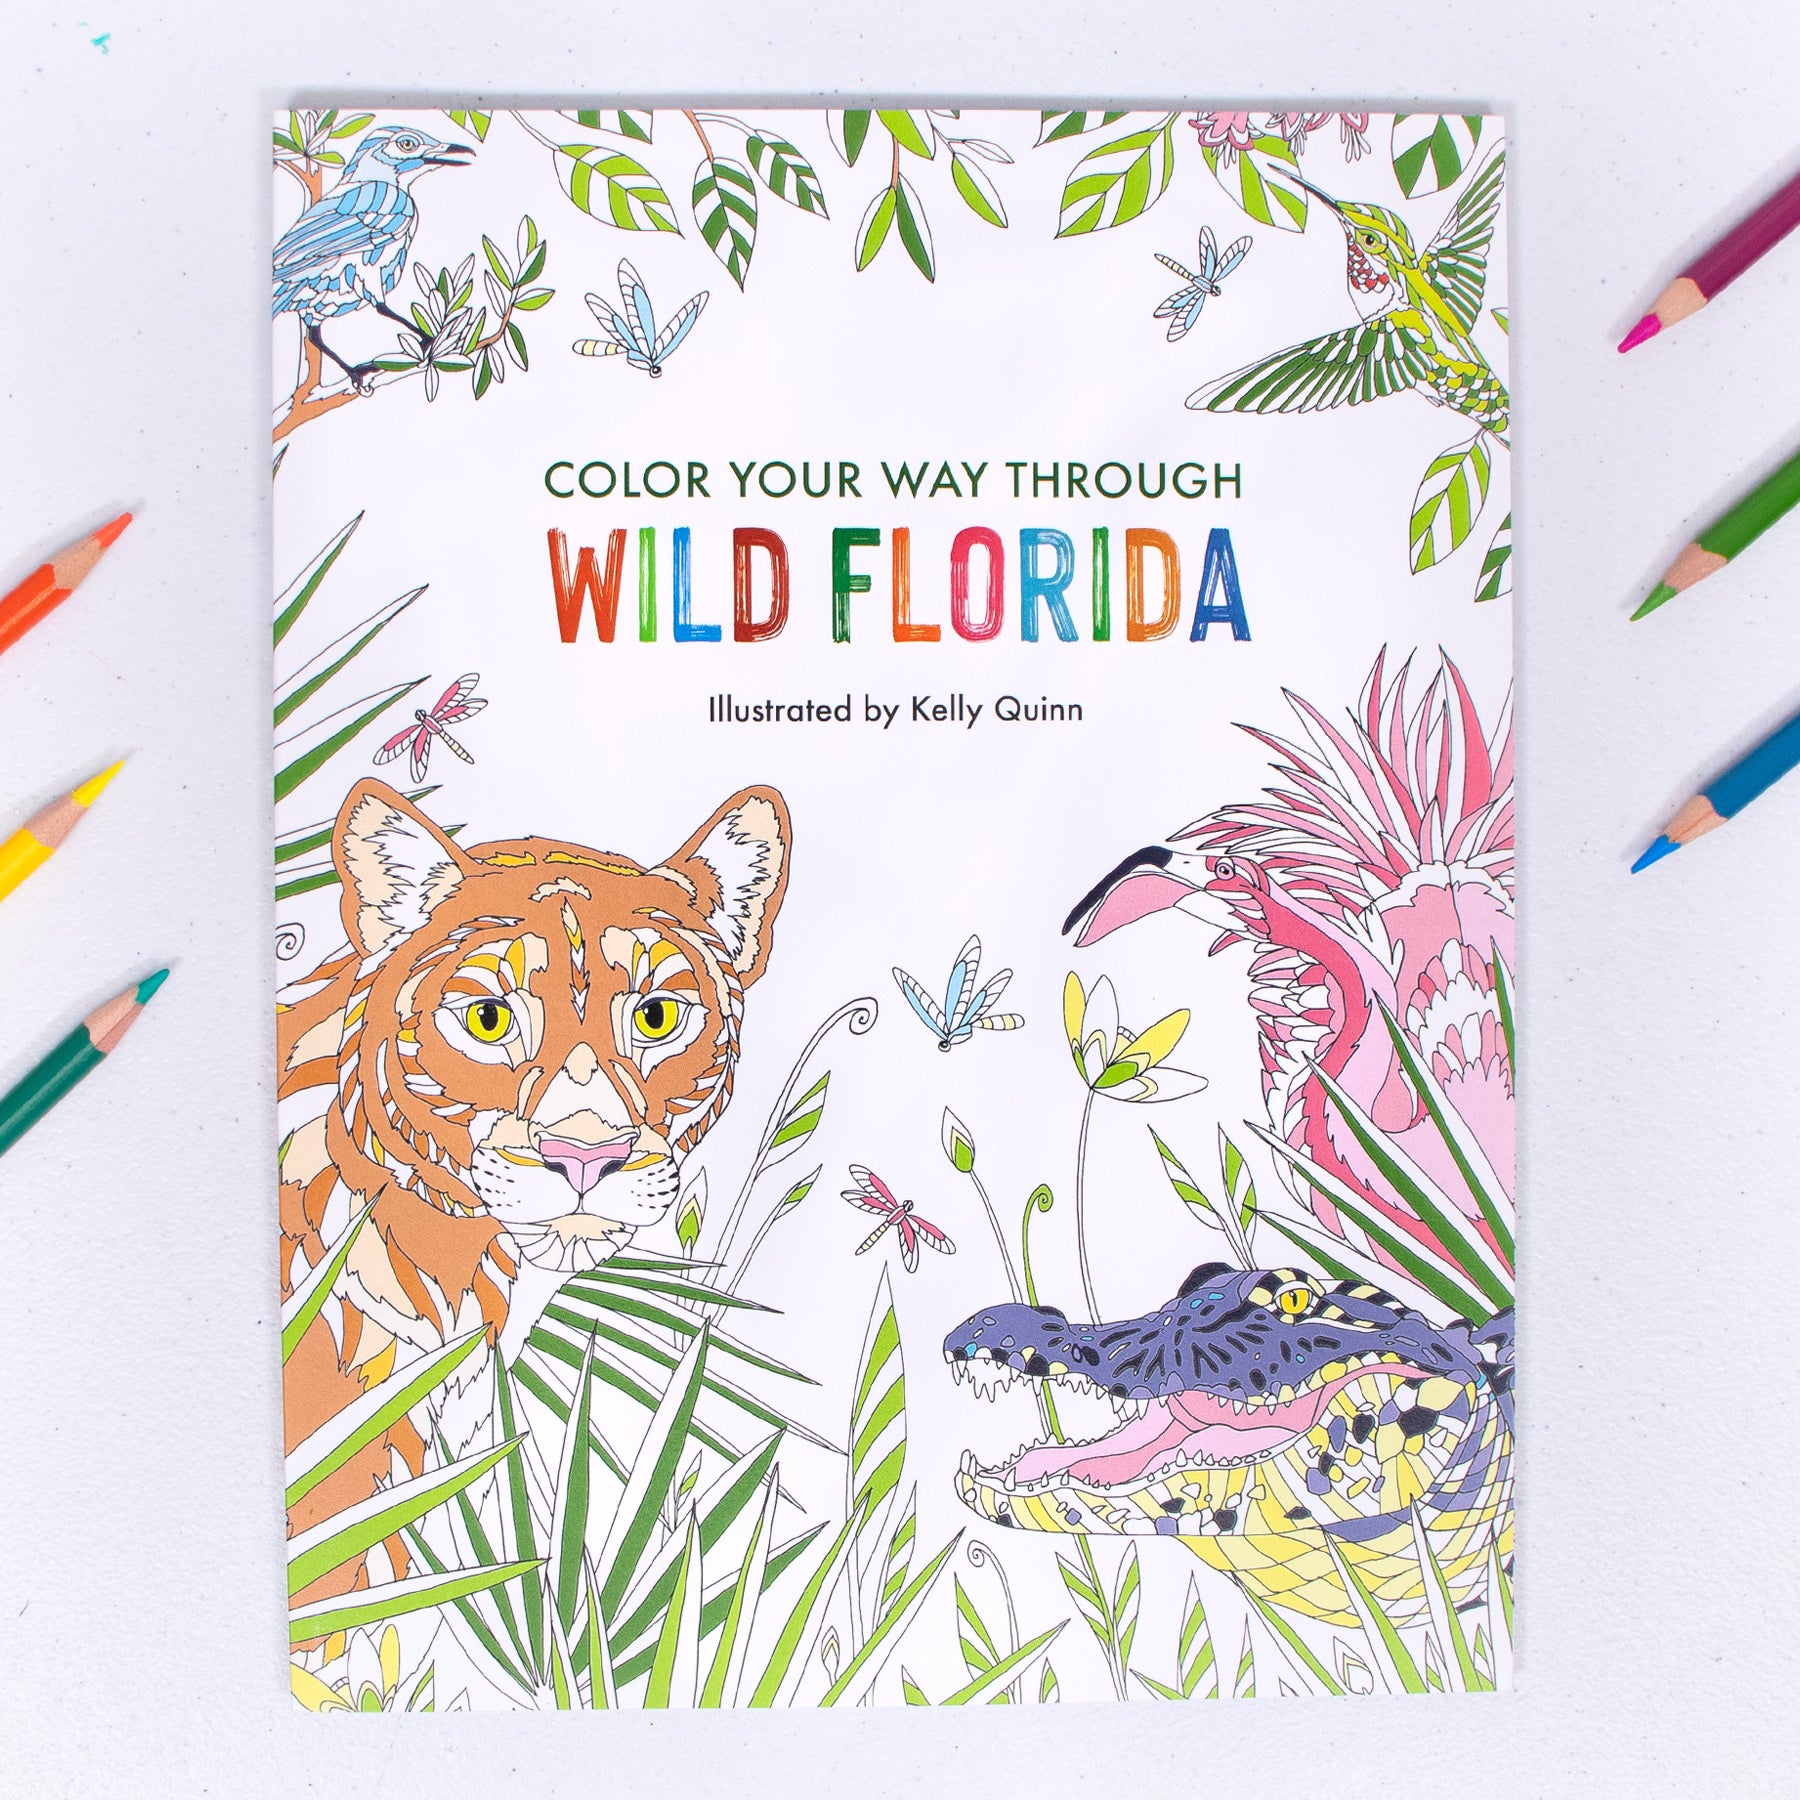 Feminine Wild: adult coloring book (Paperback)